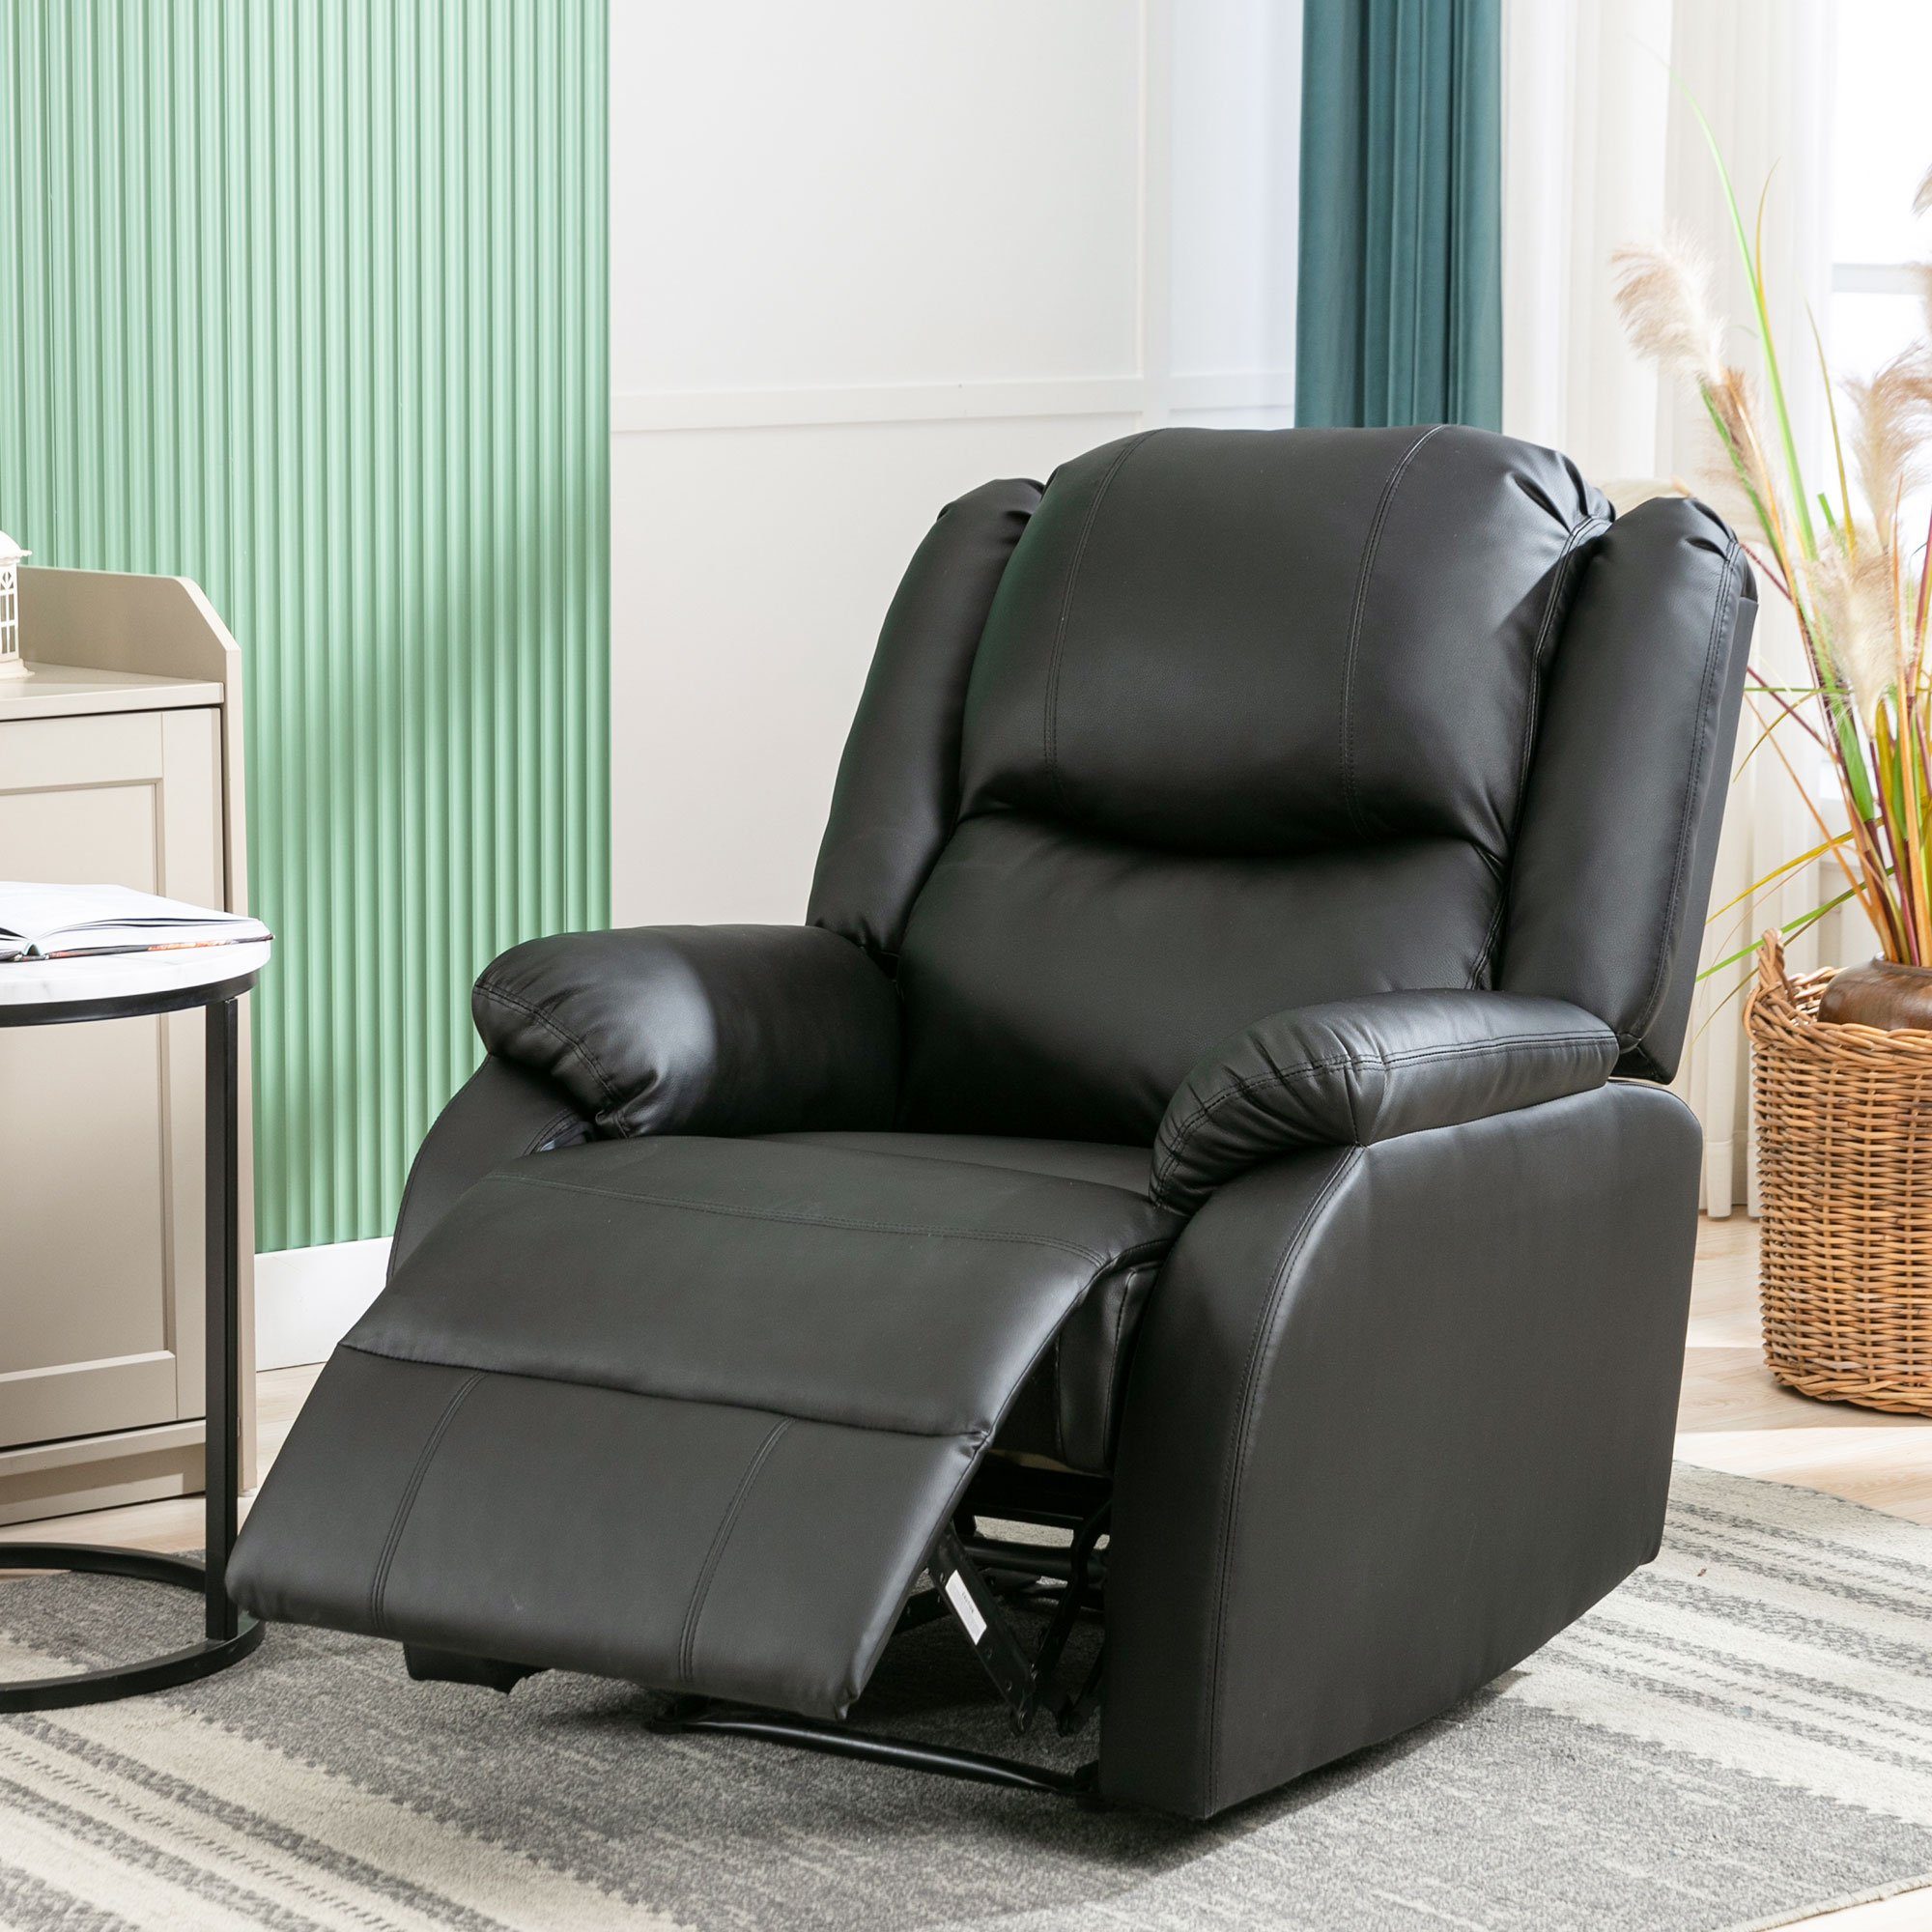 Ulife Relaxsessel TV-Sessel mit Fußstütze ausziehließer Liegestuhl PU Leder, Seitentasche, PU Leder Sessel